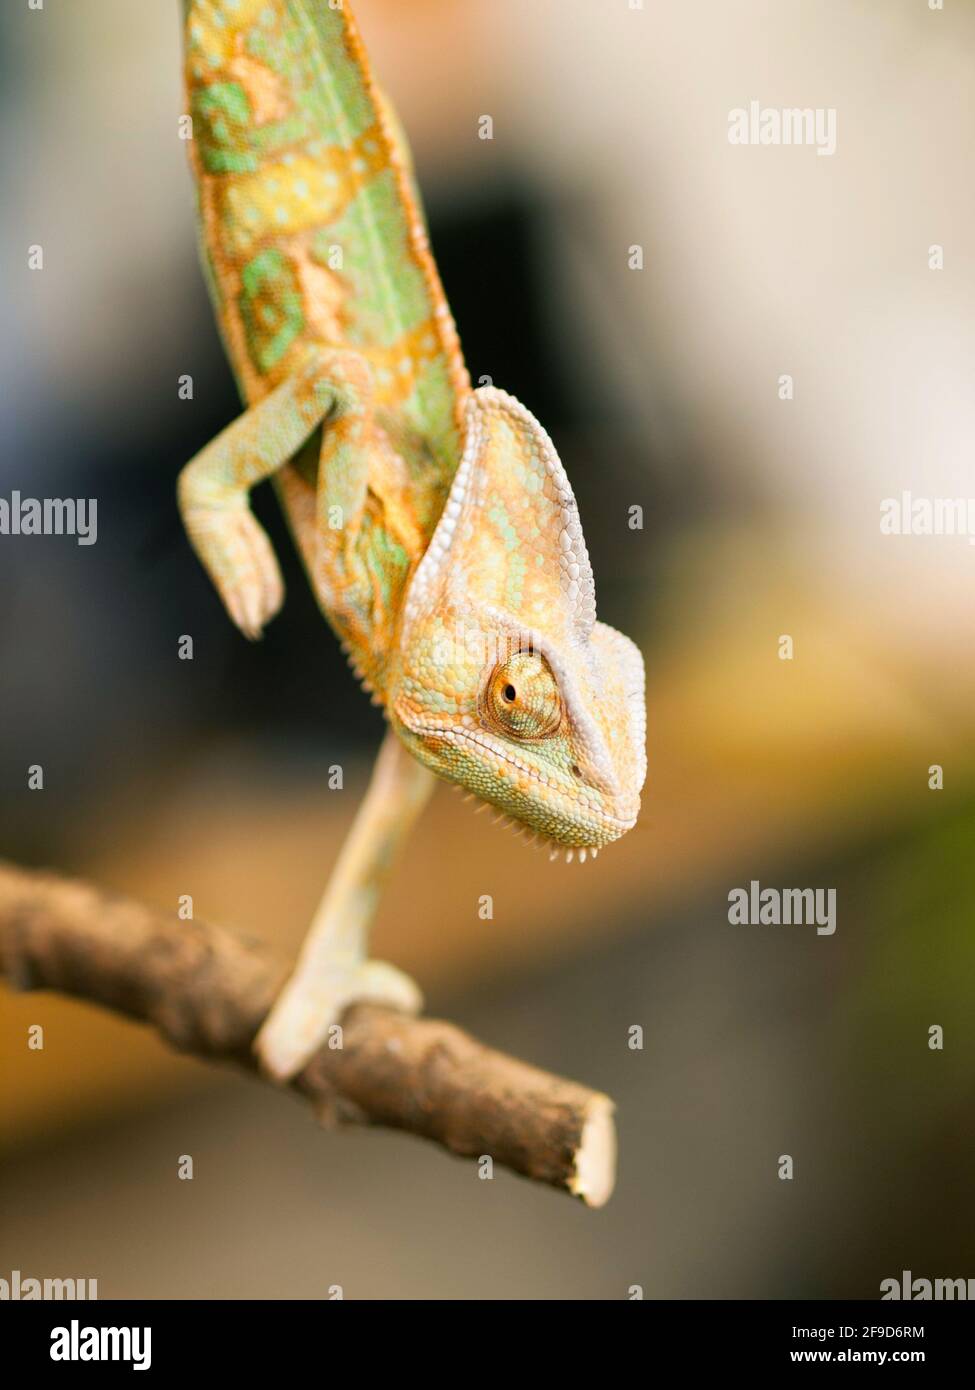 Young Yemen chameleon on the branch - Chameleo calyptratus Stock Photo